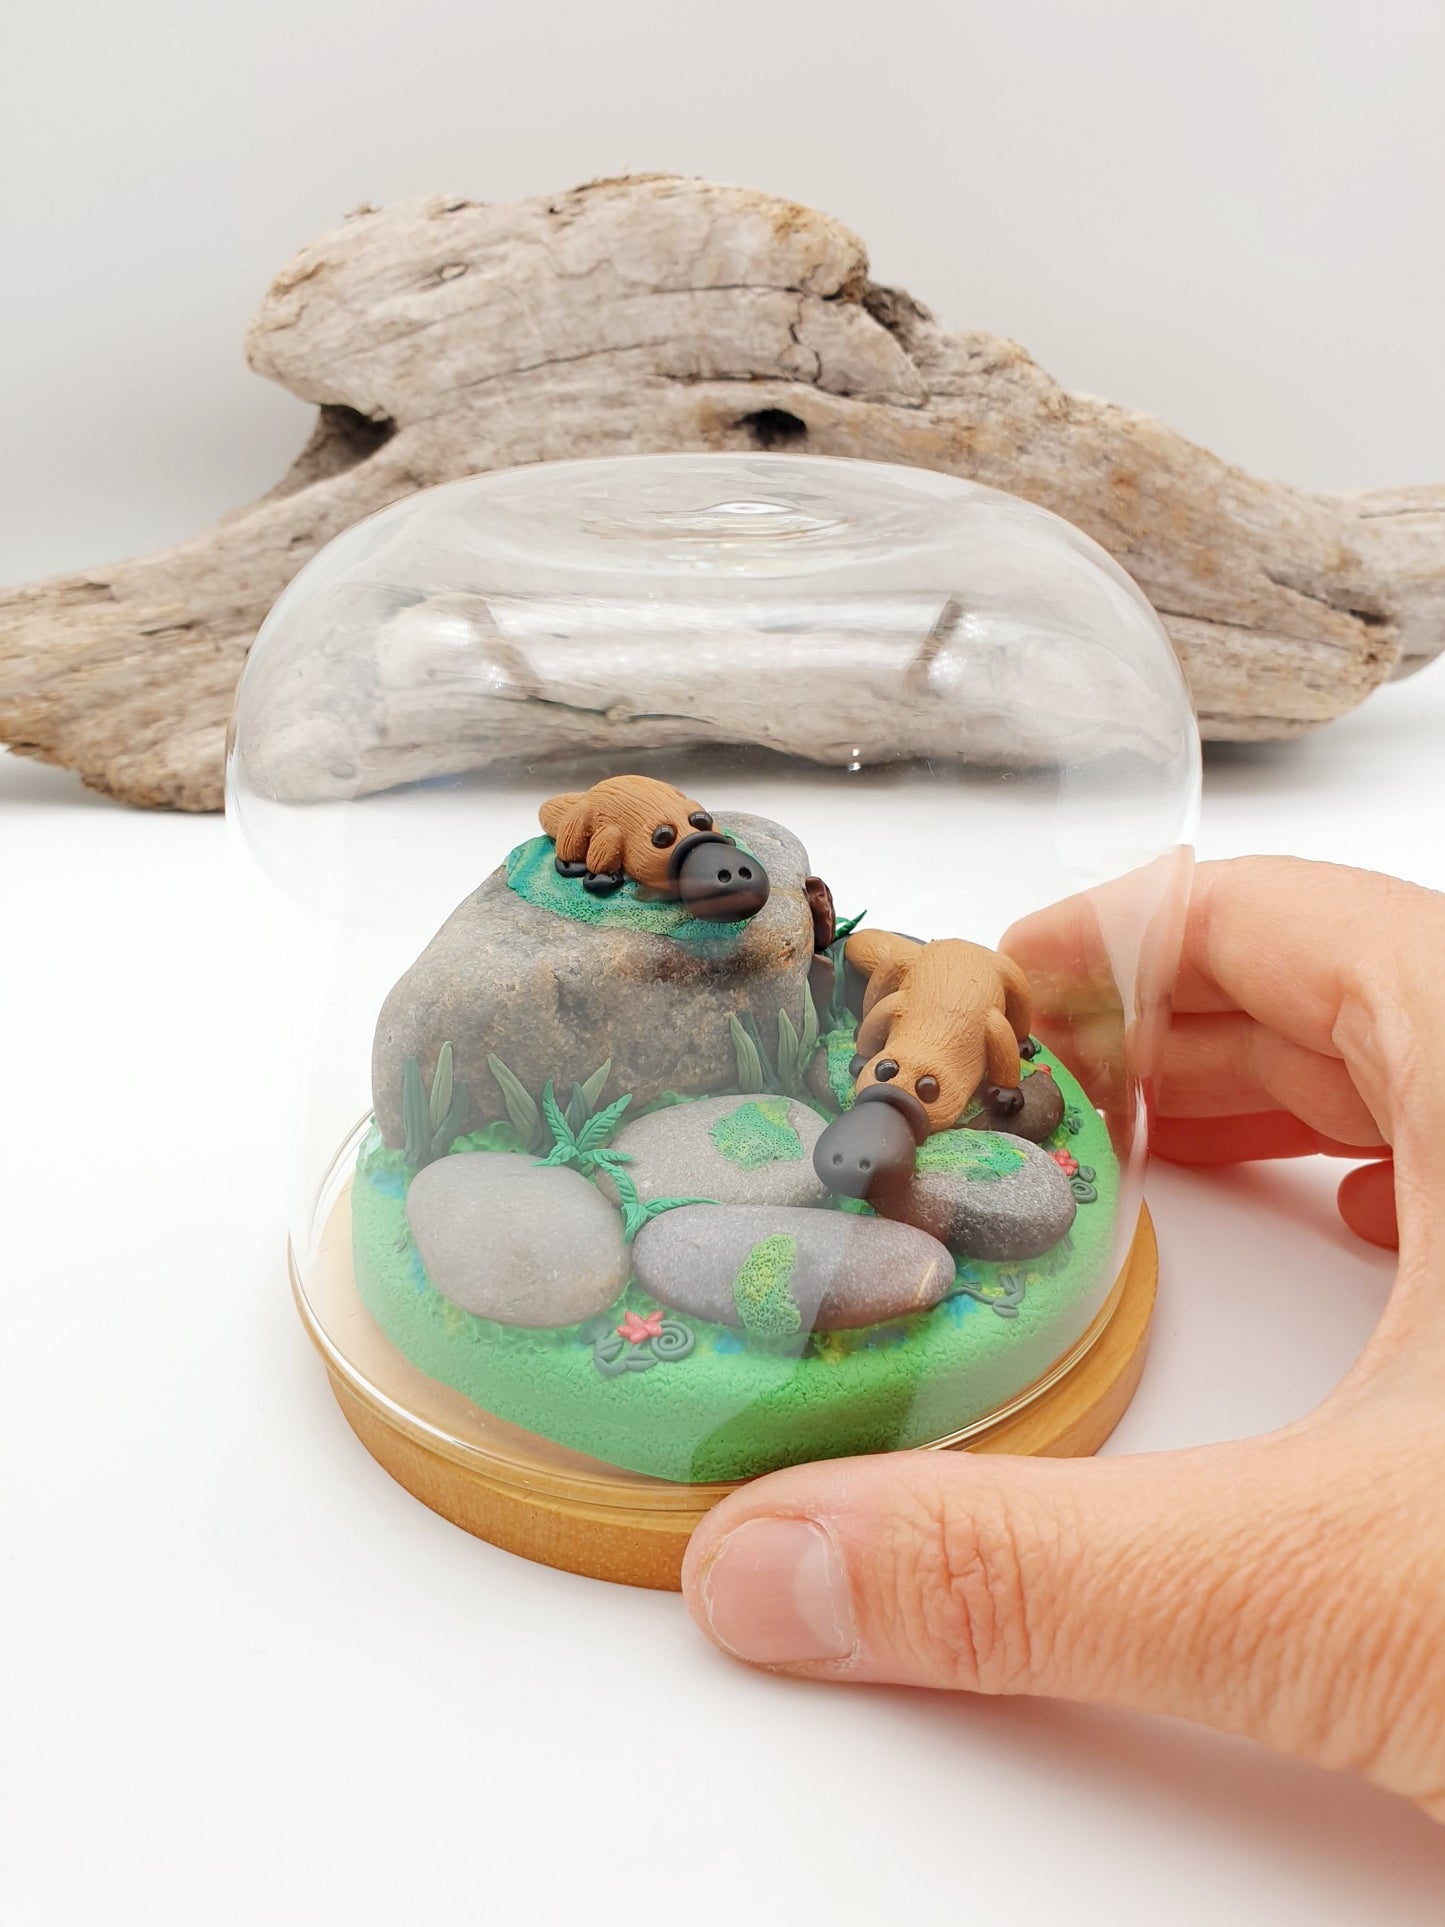 Platypus on rocks sculpture in glass cloche